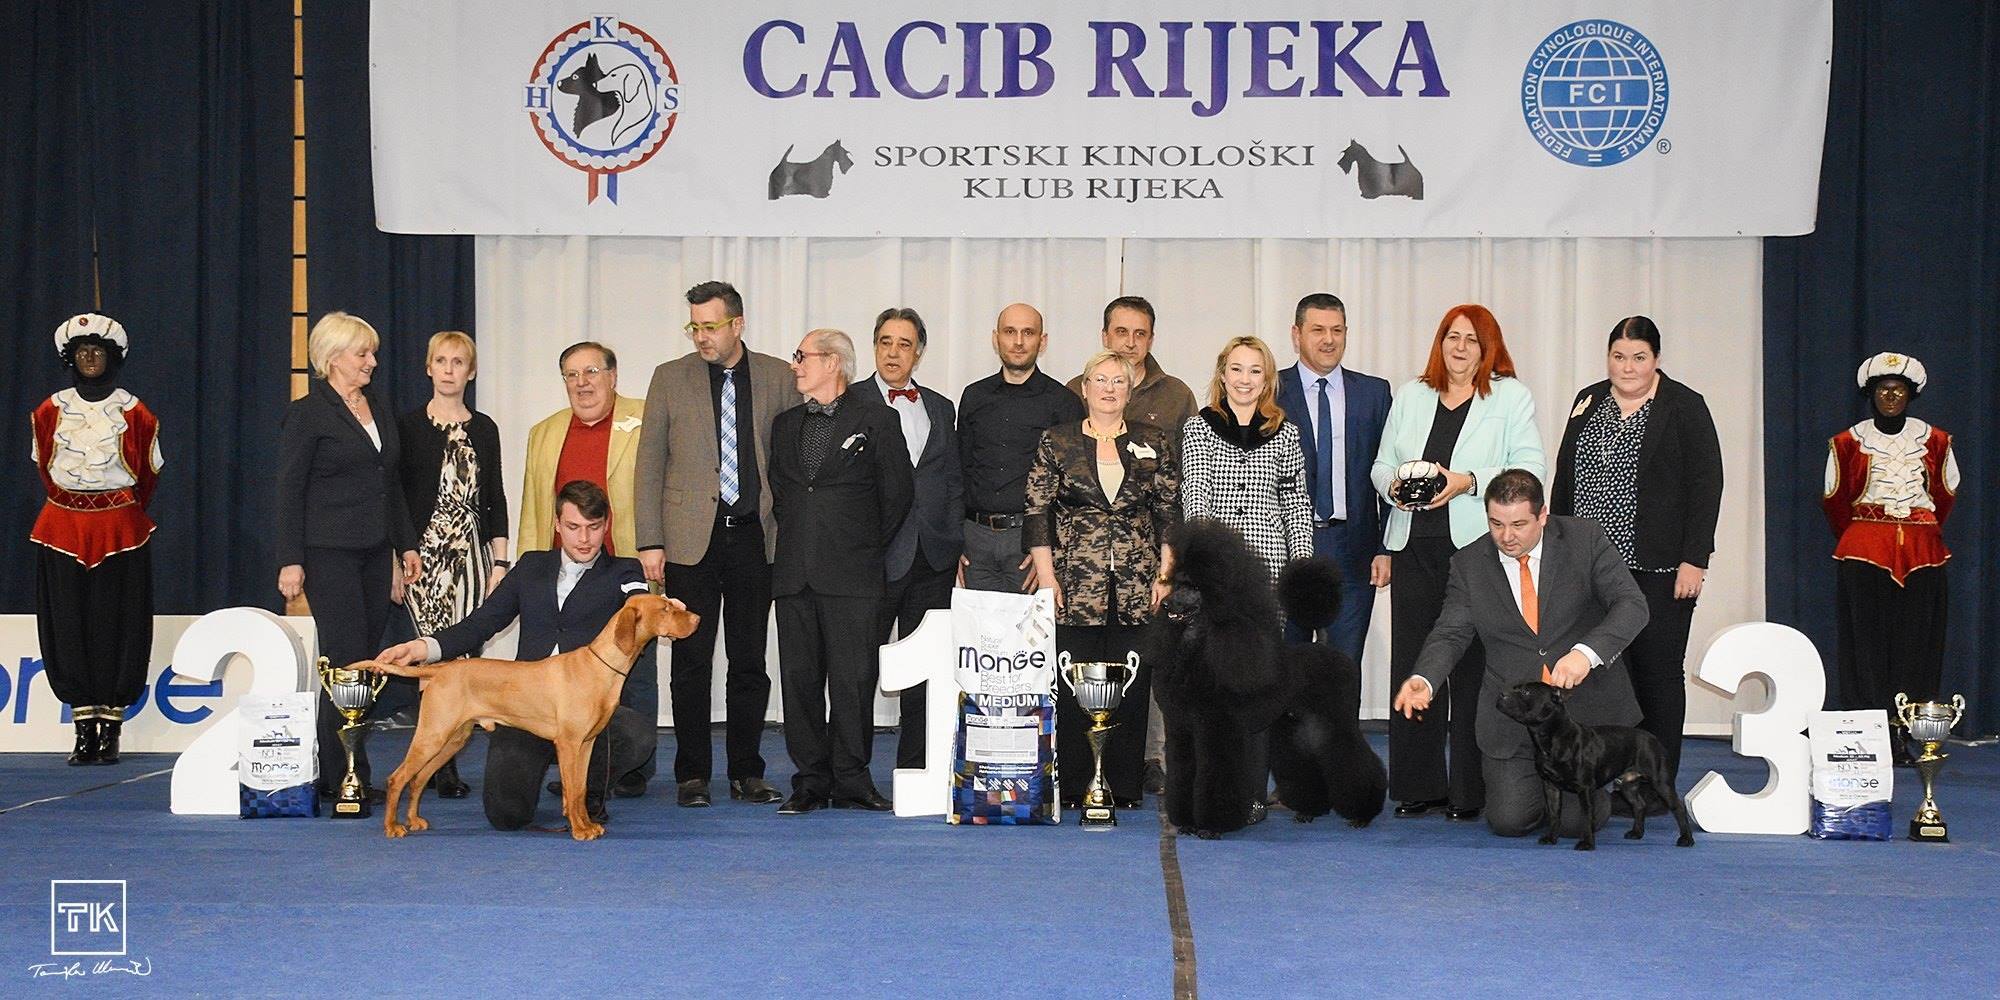 Double CACIB Rijeka 2019